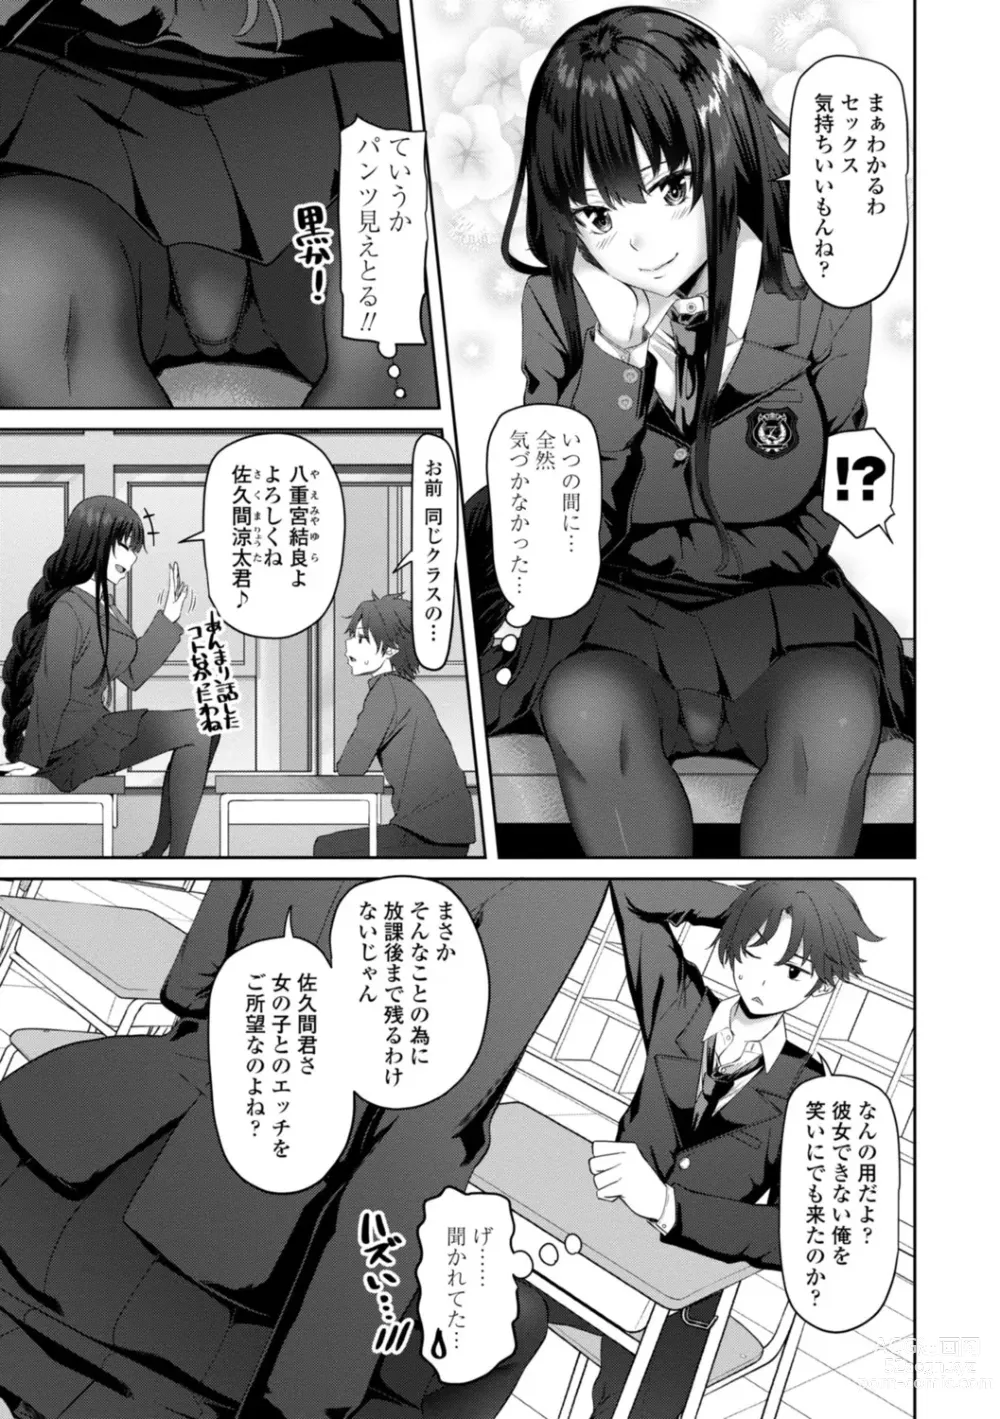 Page 5 of manga Watashi o SeFri ni Shite Minai? - Would you like to try me as a sex friend? + Digital Tokusouban  Tokuten